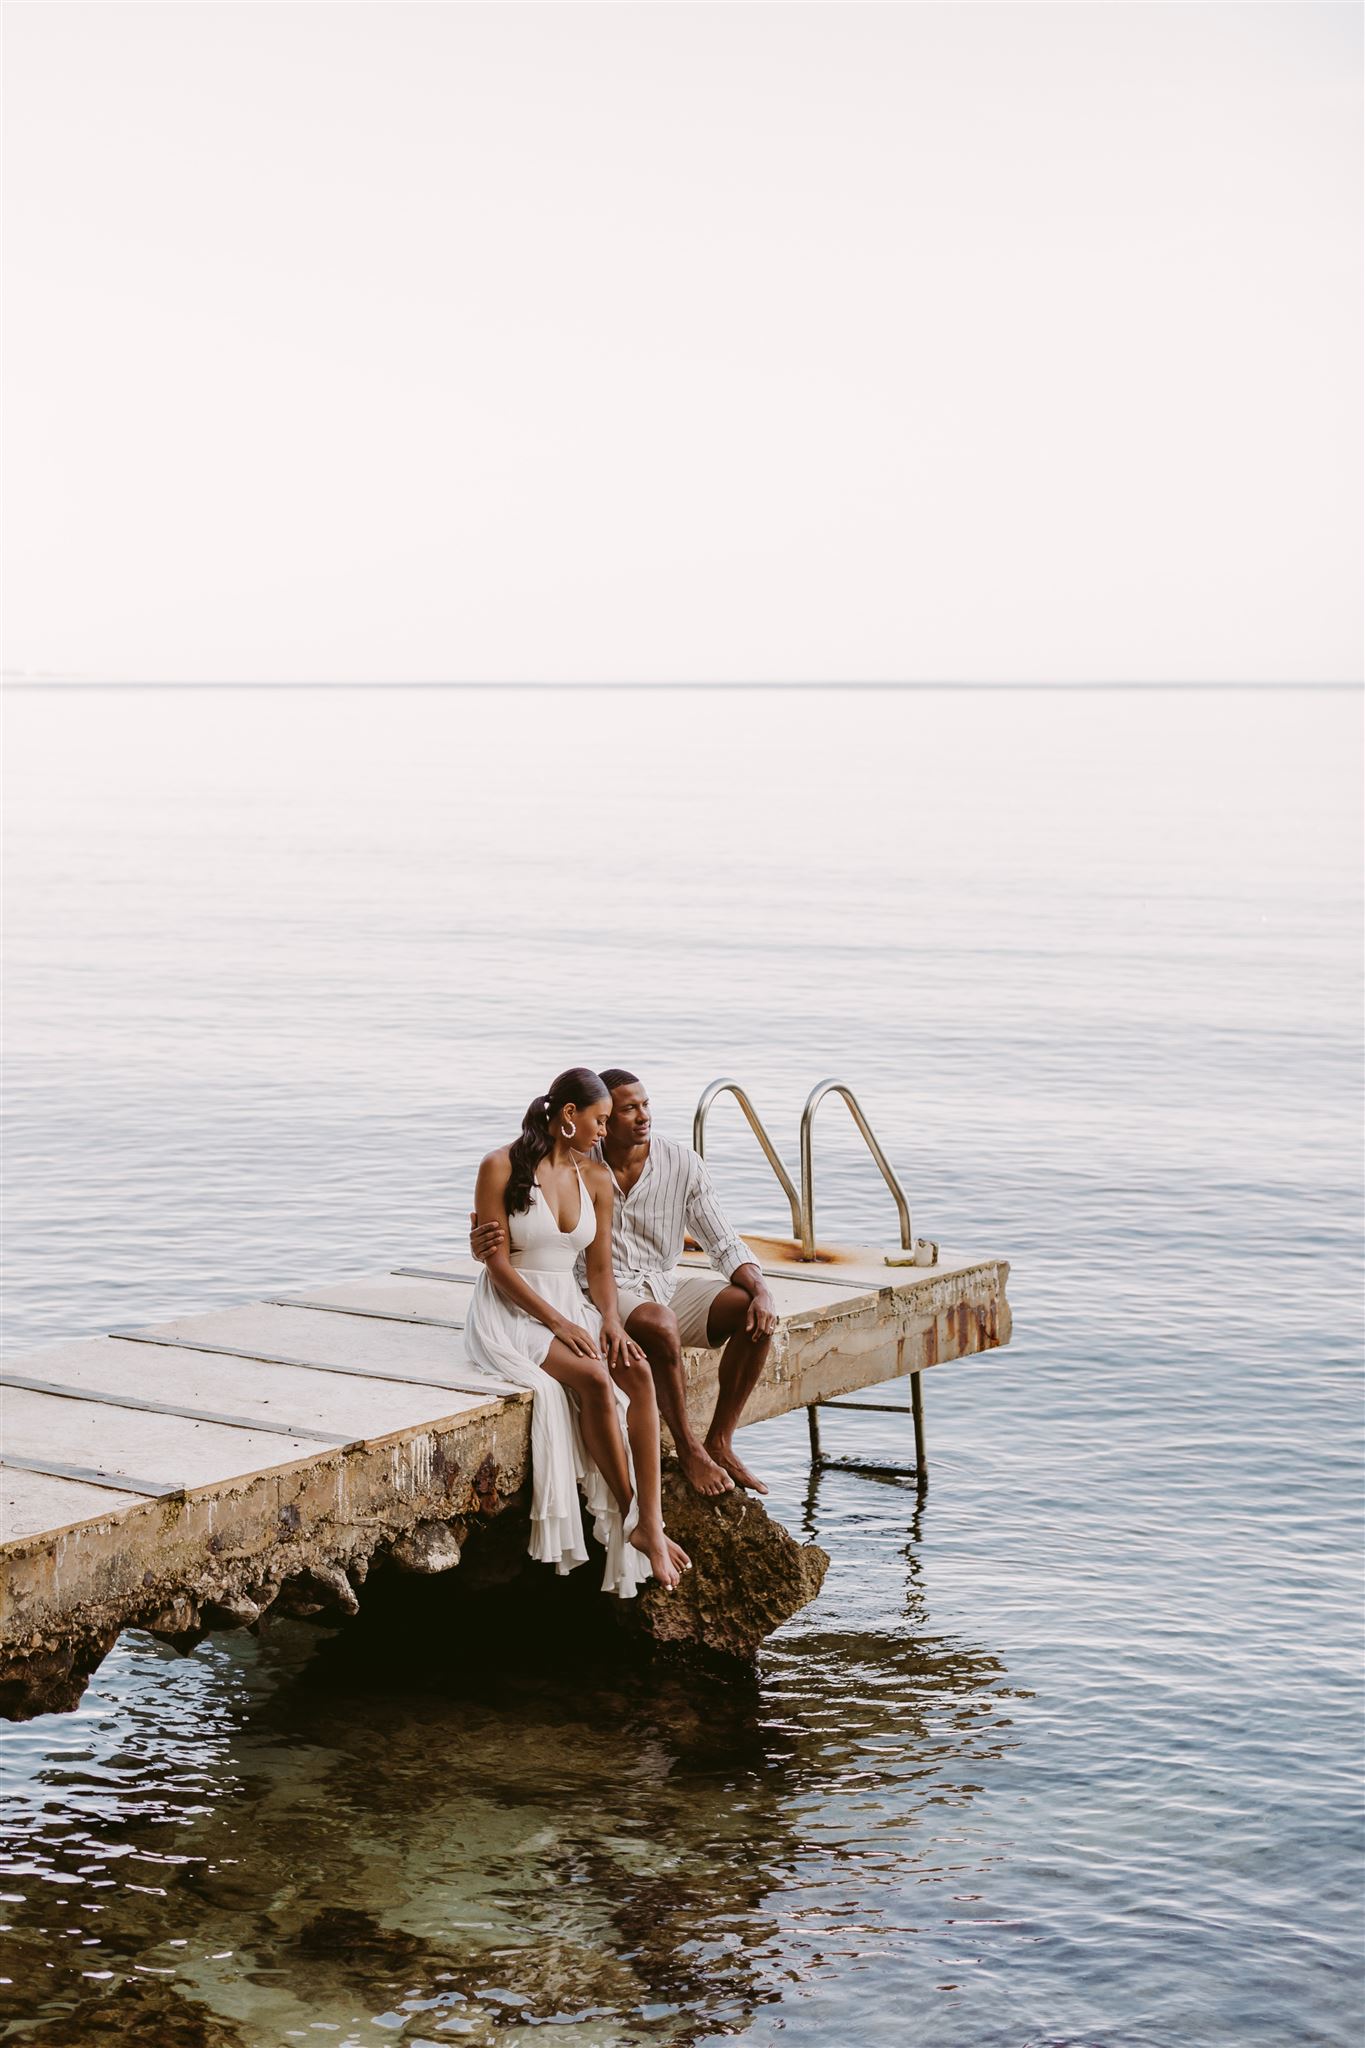 Husband Errol Barnett sits on a dock with wife Ariana Tolbert in Jamaica during their post-wedding photoshoot by Virginia luxury wedding photographer Victoria Heer.